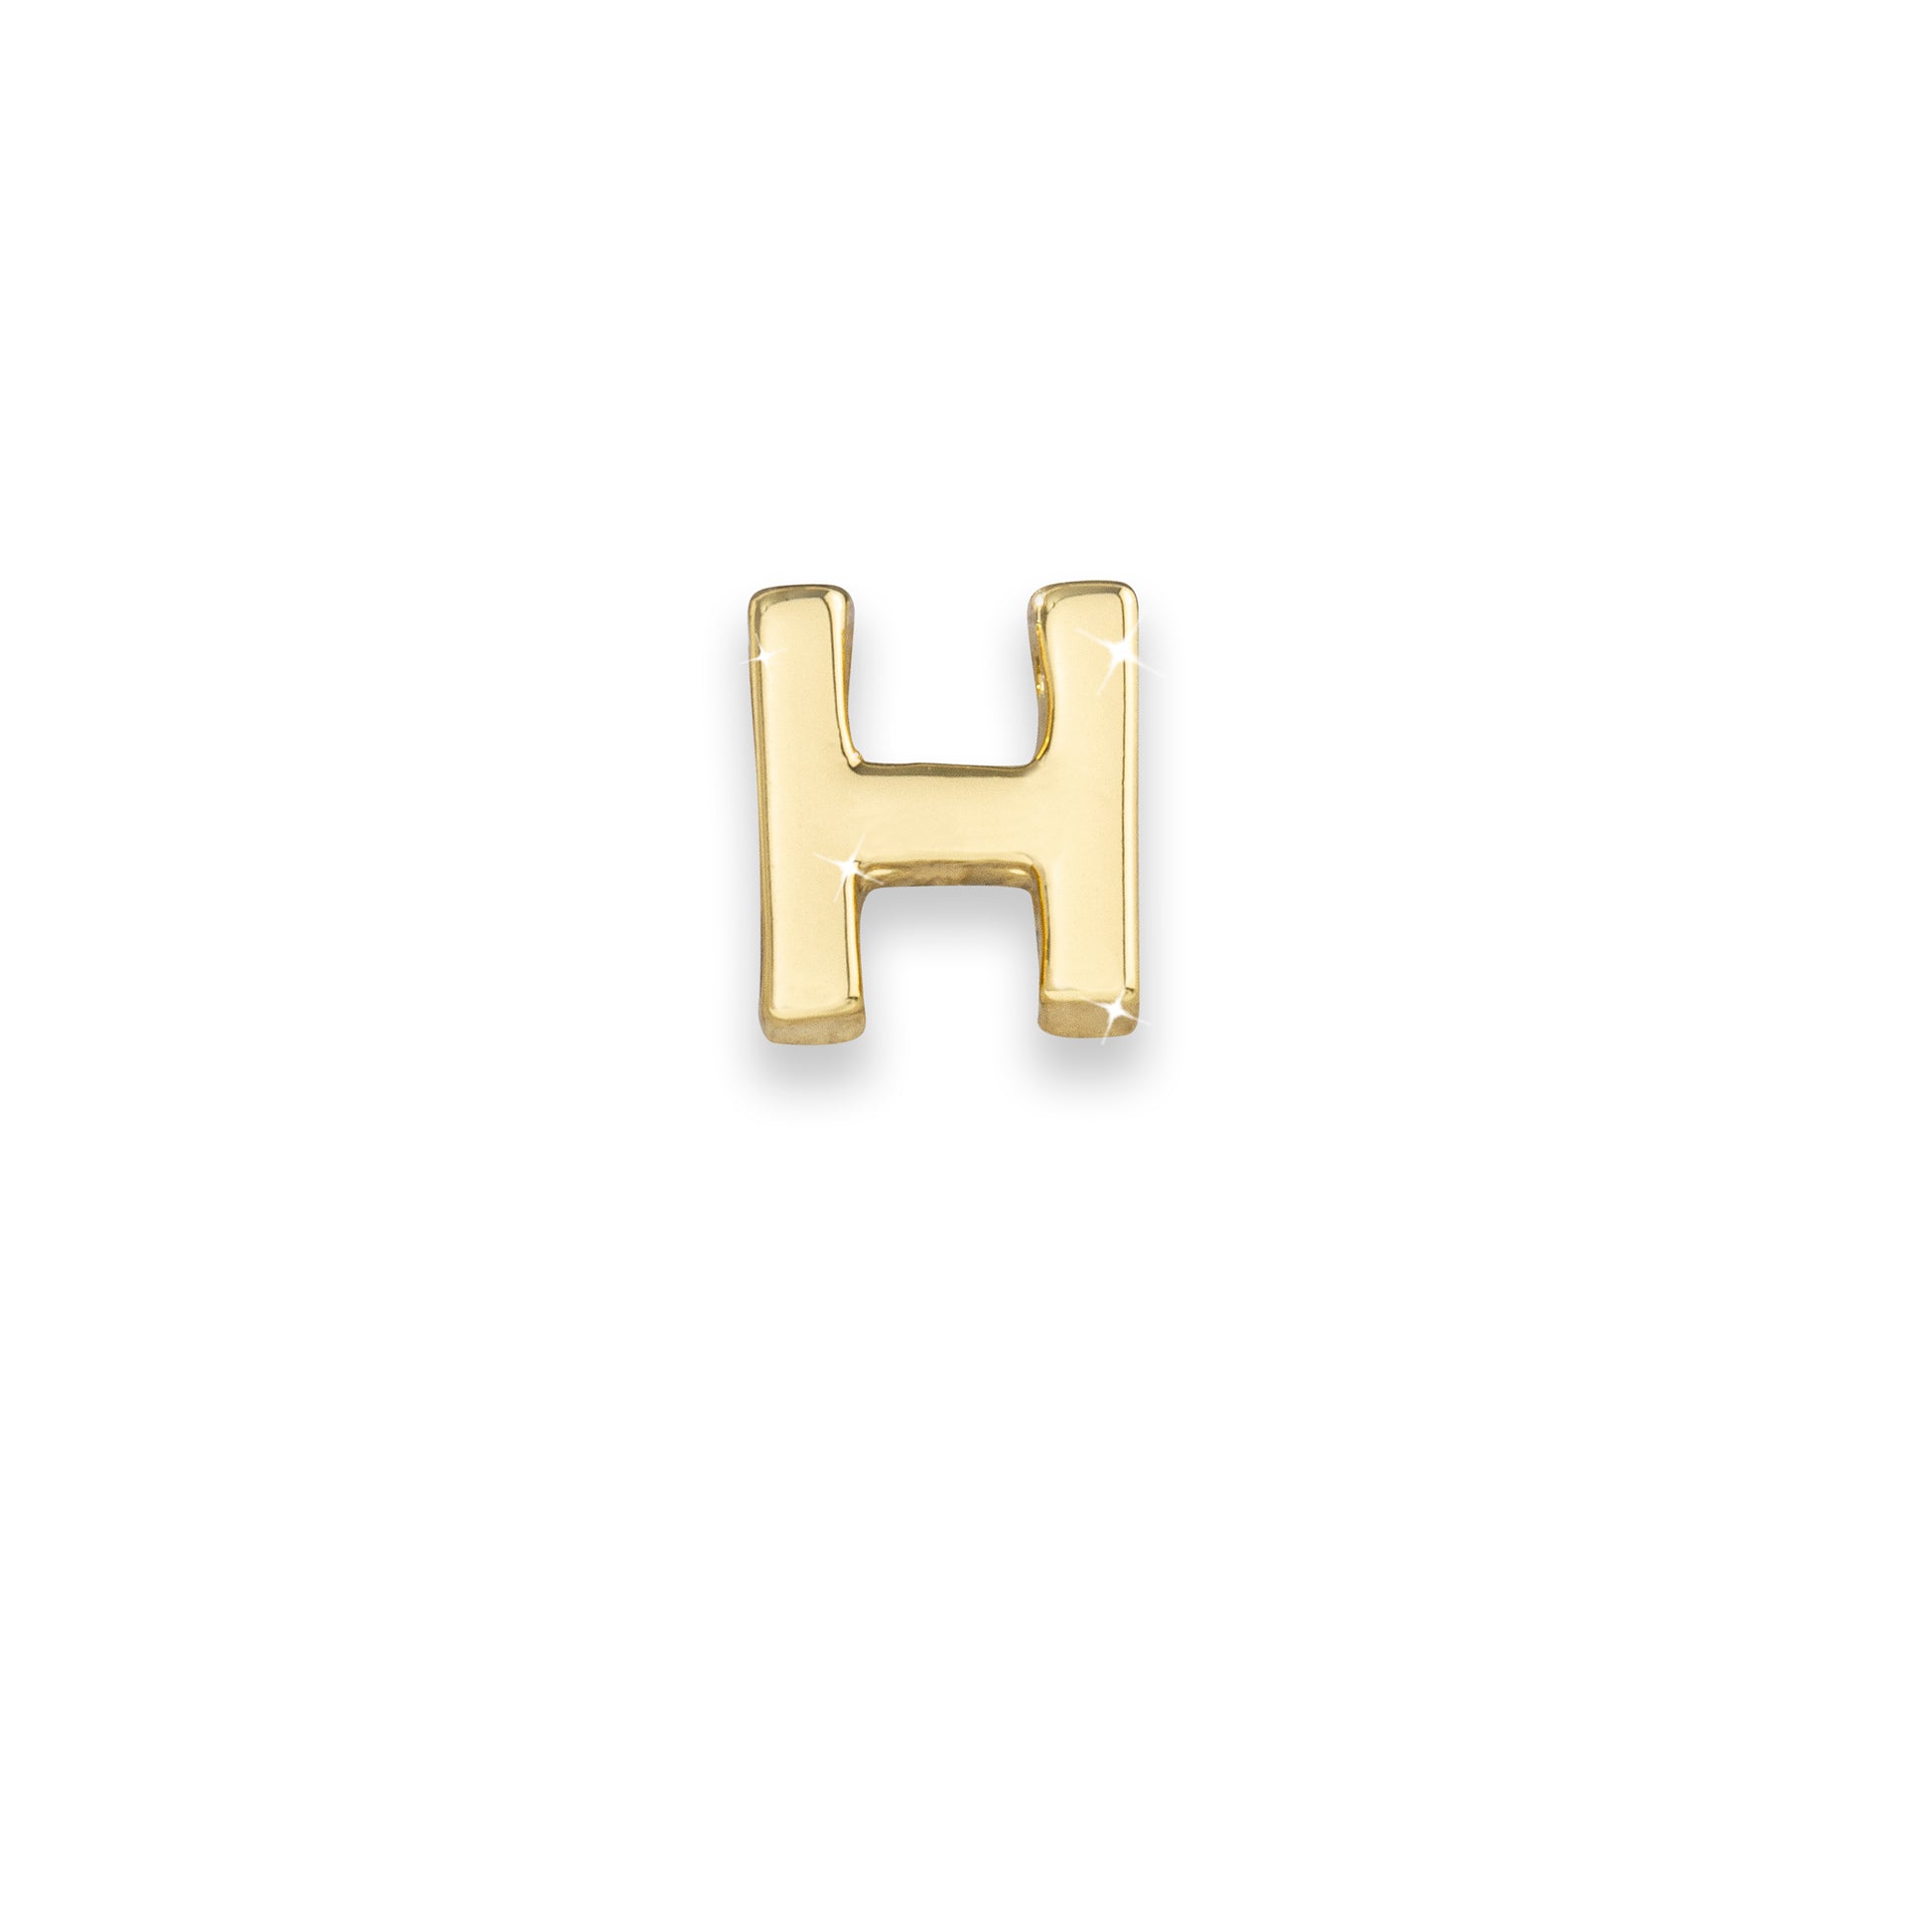 Gold letter H monogram charm for necklaces & bracelets